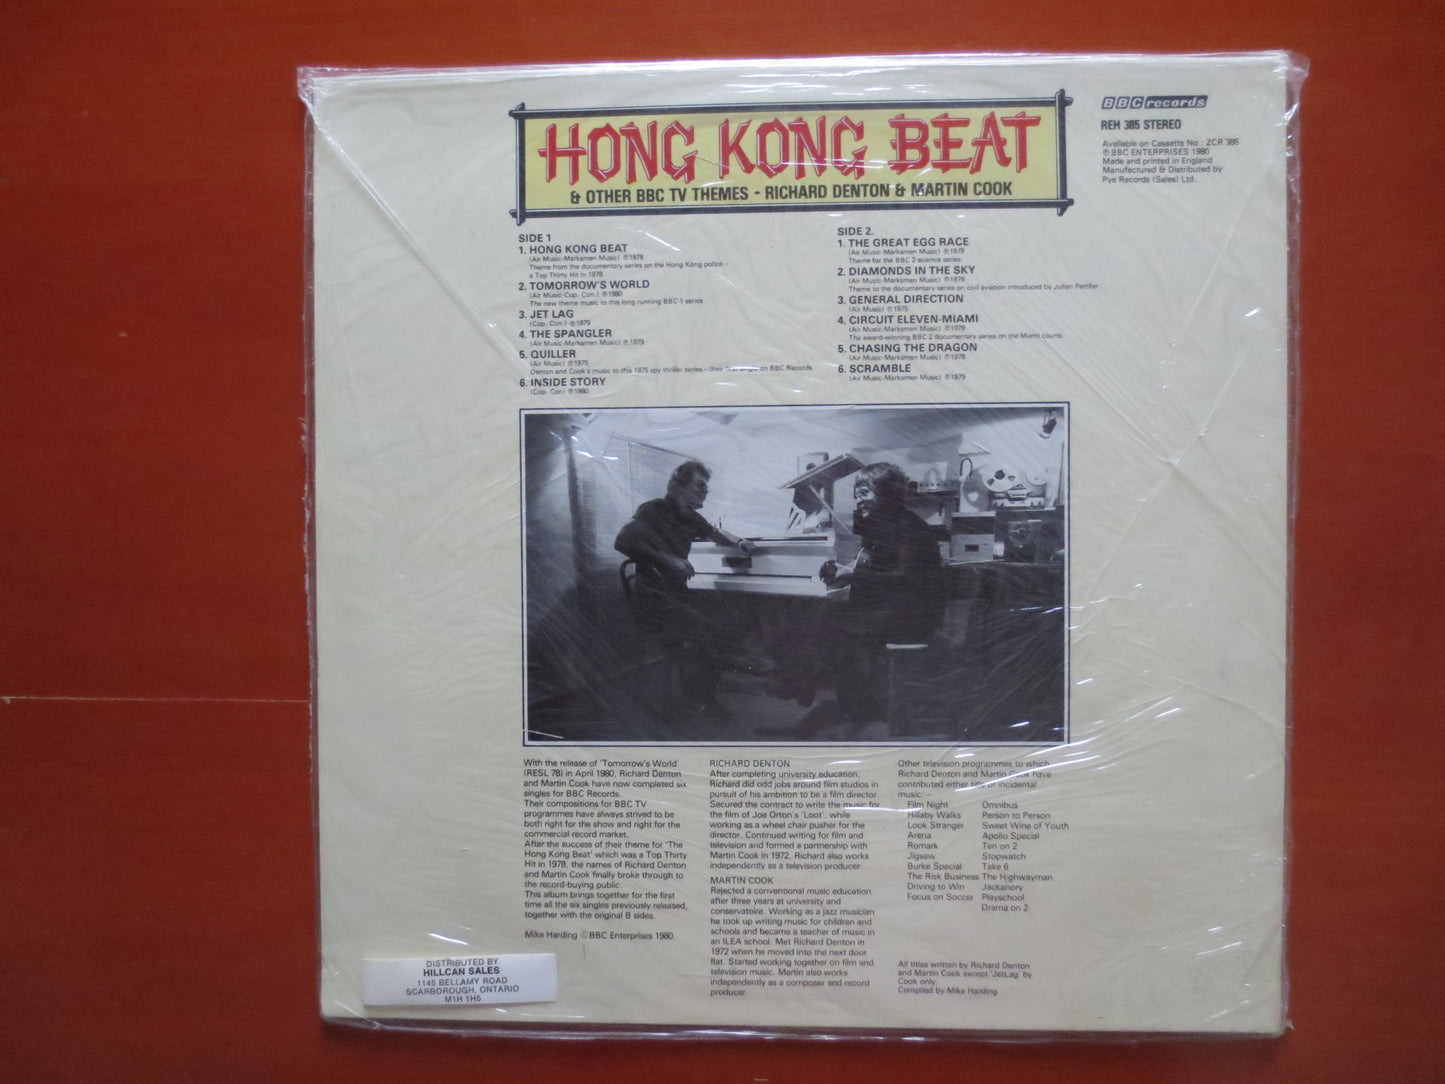 BBC RECORDS, Hong KONG Beat, Bbc Album, Bbc Vinyl, Bbc Lp, Tv Theme Record, Tv Theme Album, Tv Theme Vinyl, 1980 Records